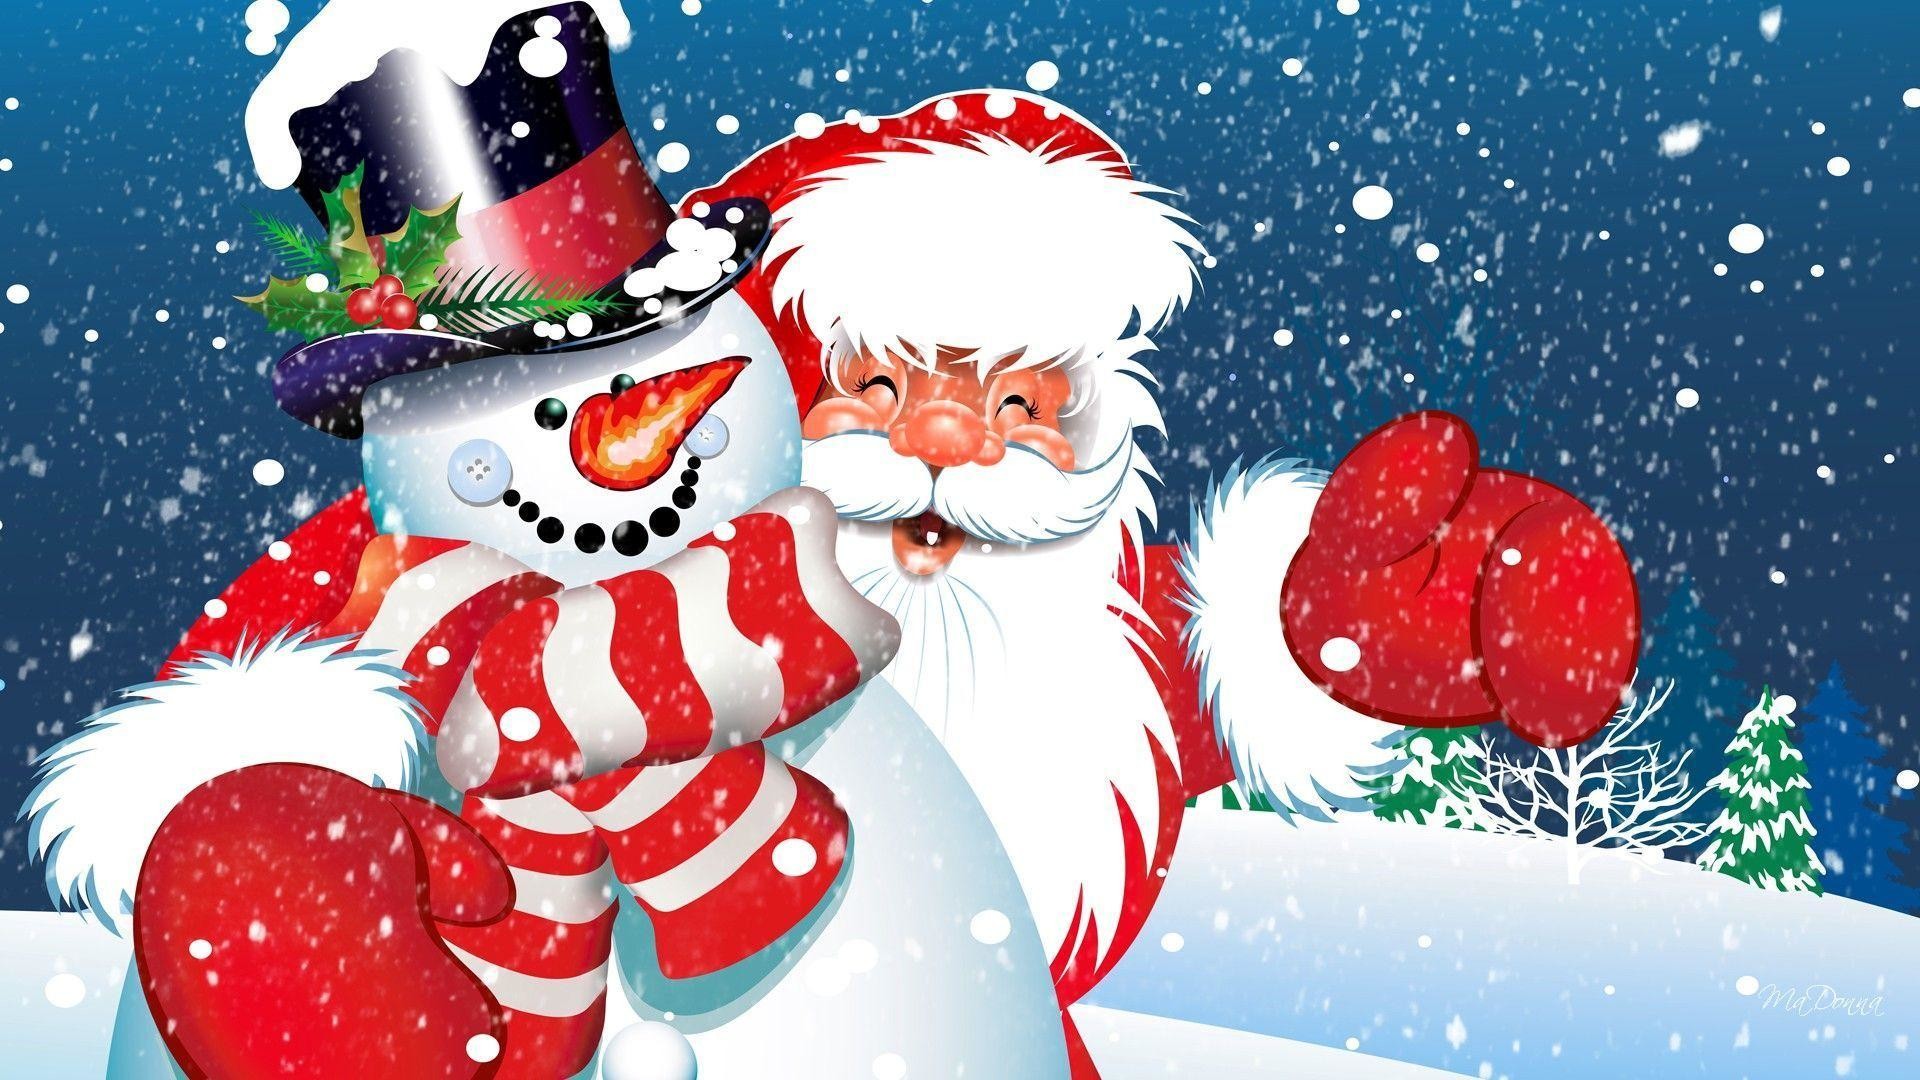 1920x1080 Wallpapers For > Frosty The Snowman Wallpaper Desktop